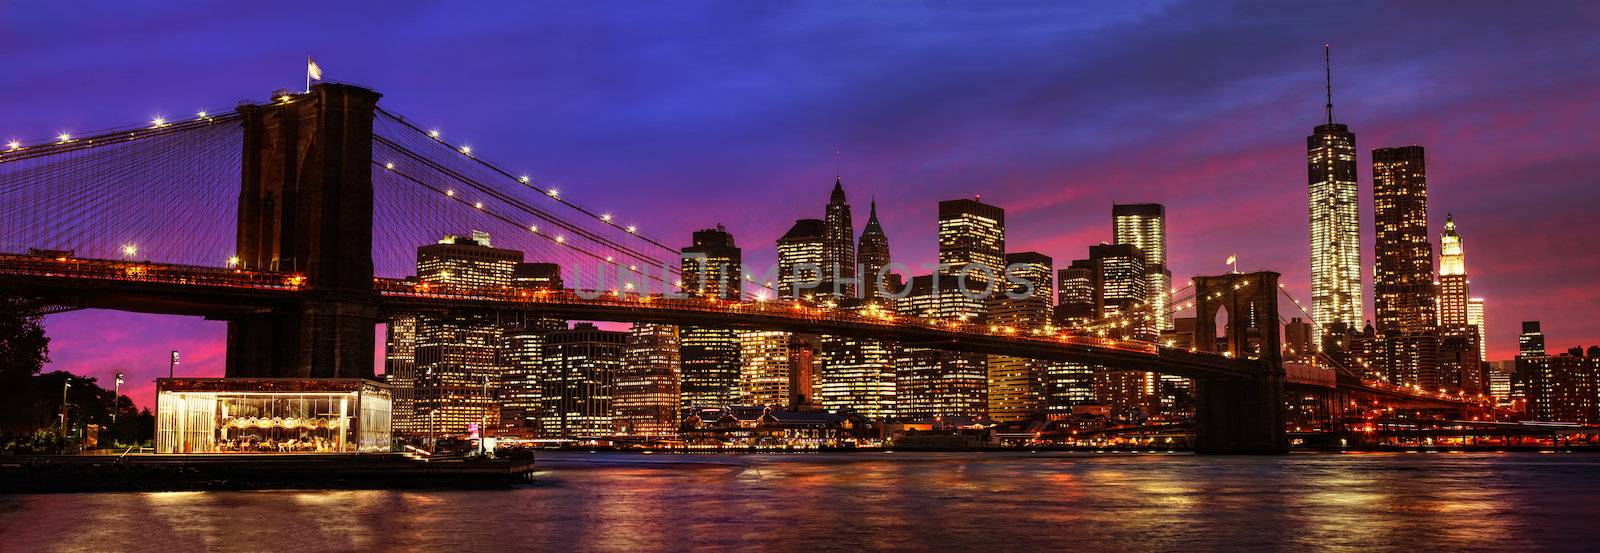 Brooklyn Bridge and Manhattan at sunset by palinchak